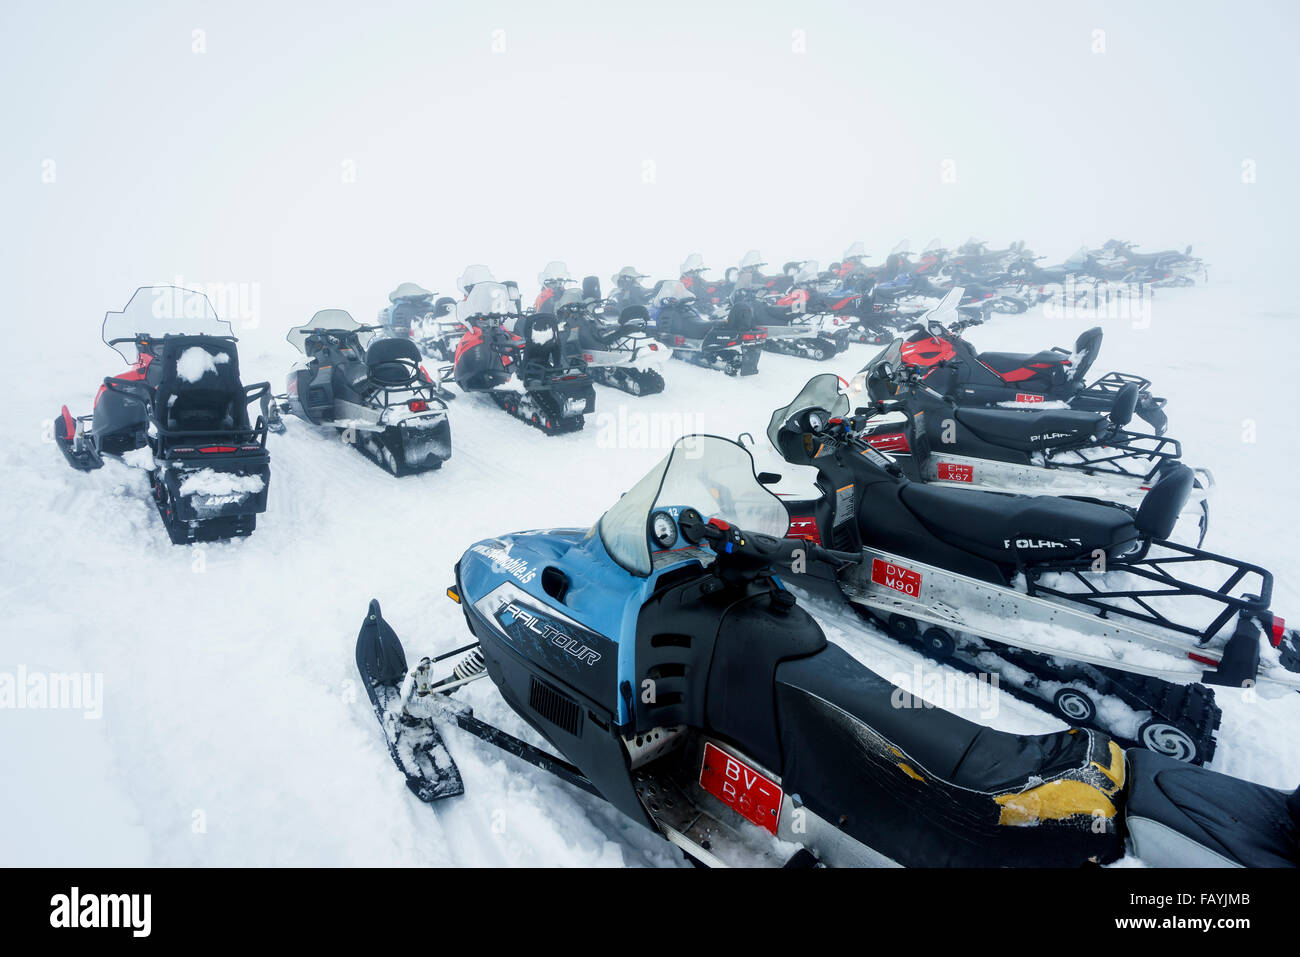 Motos alineadas, día de nieve, Islandia Foto de stock